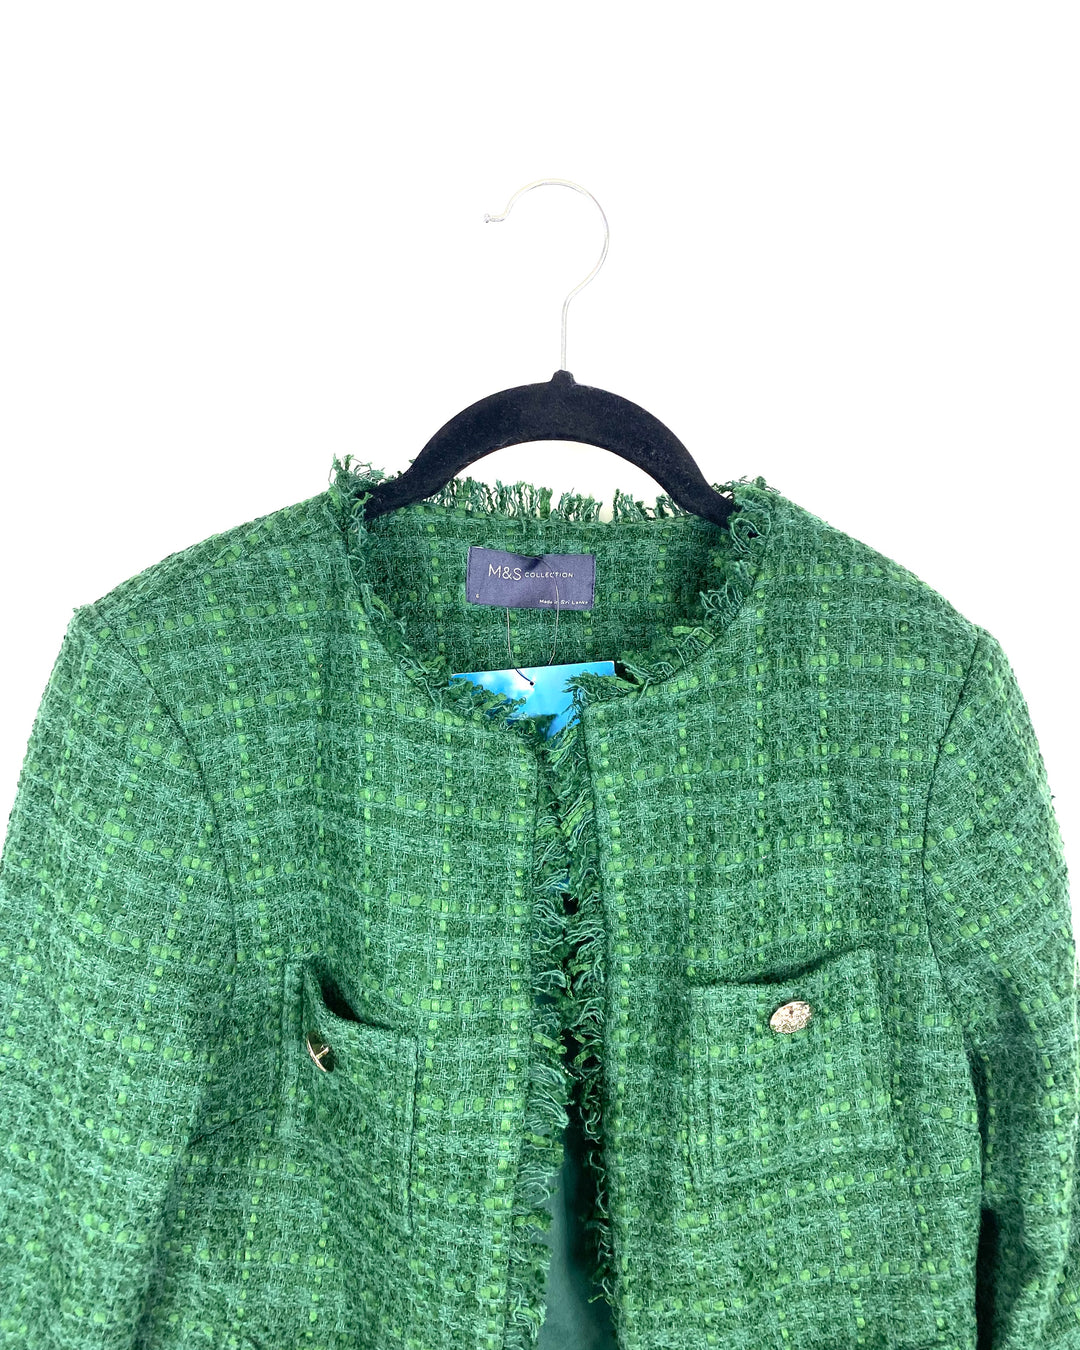 Green Tweed Cropped Blazer - Size 0